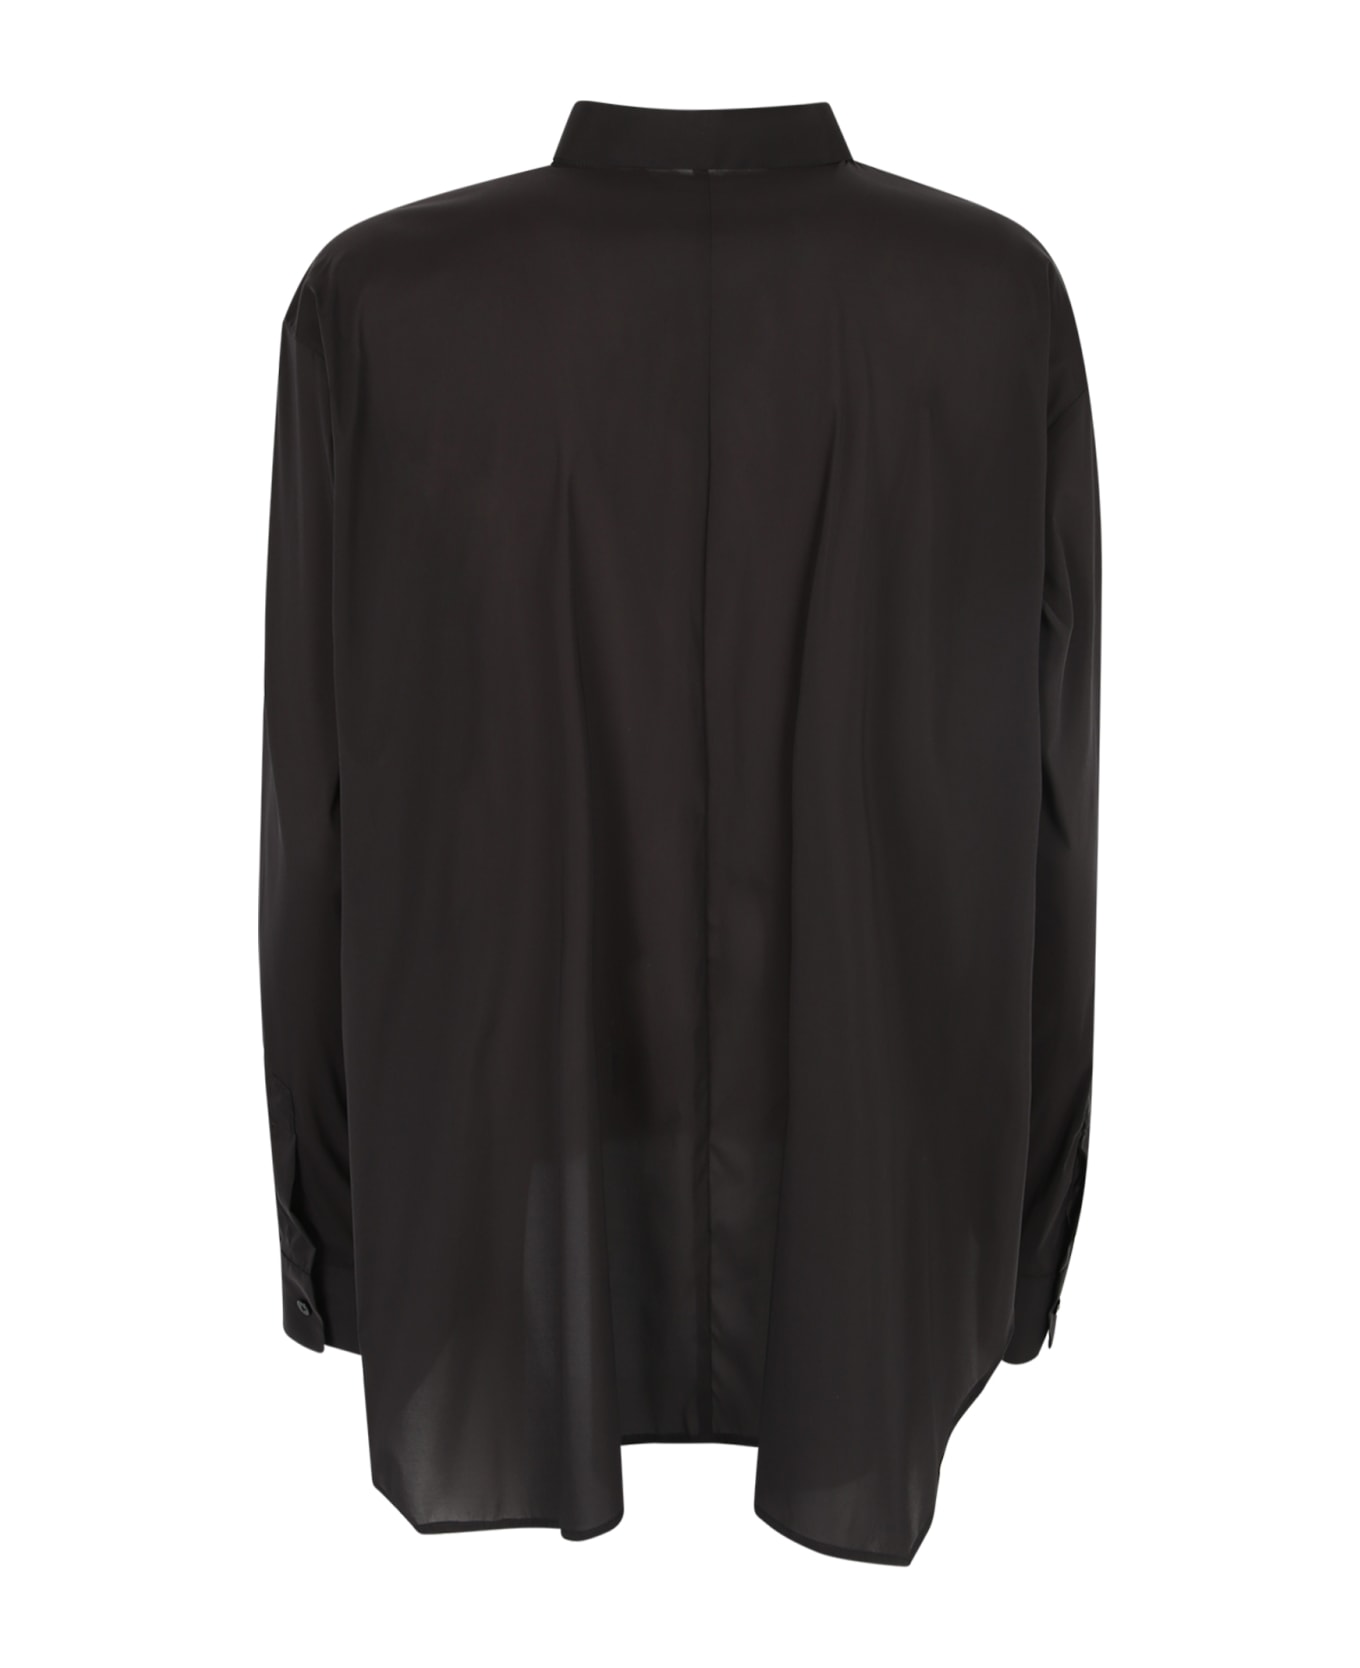 Xacus Oversized Shirt - Black